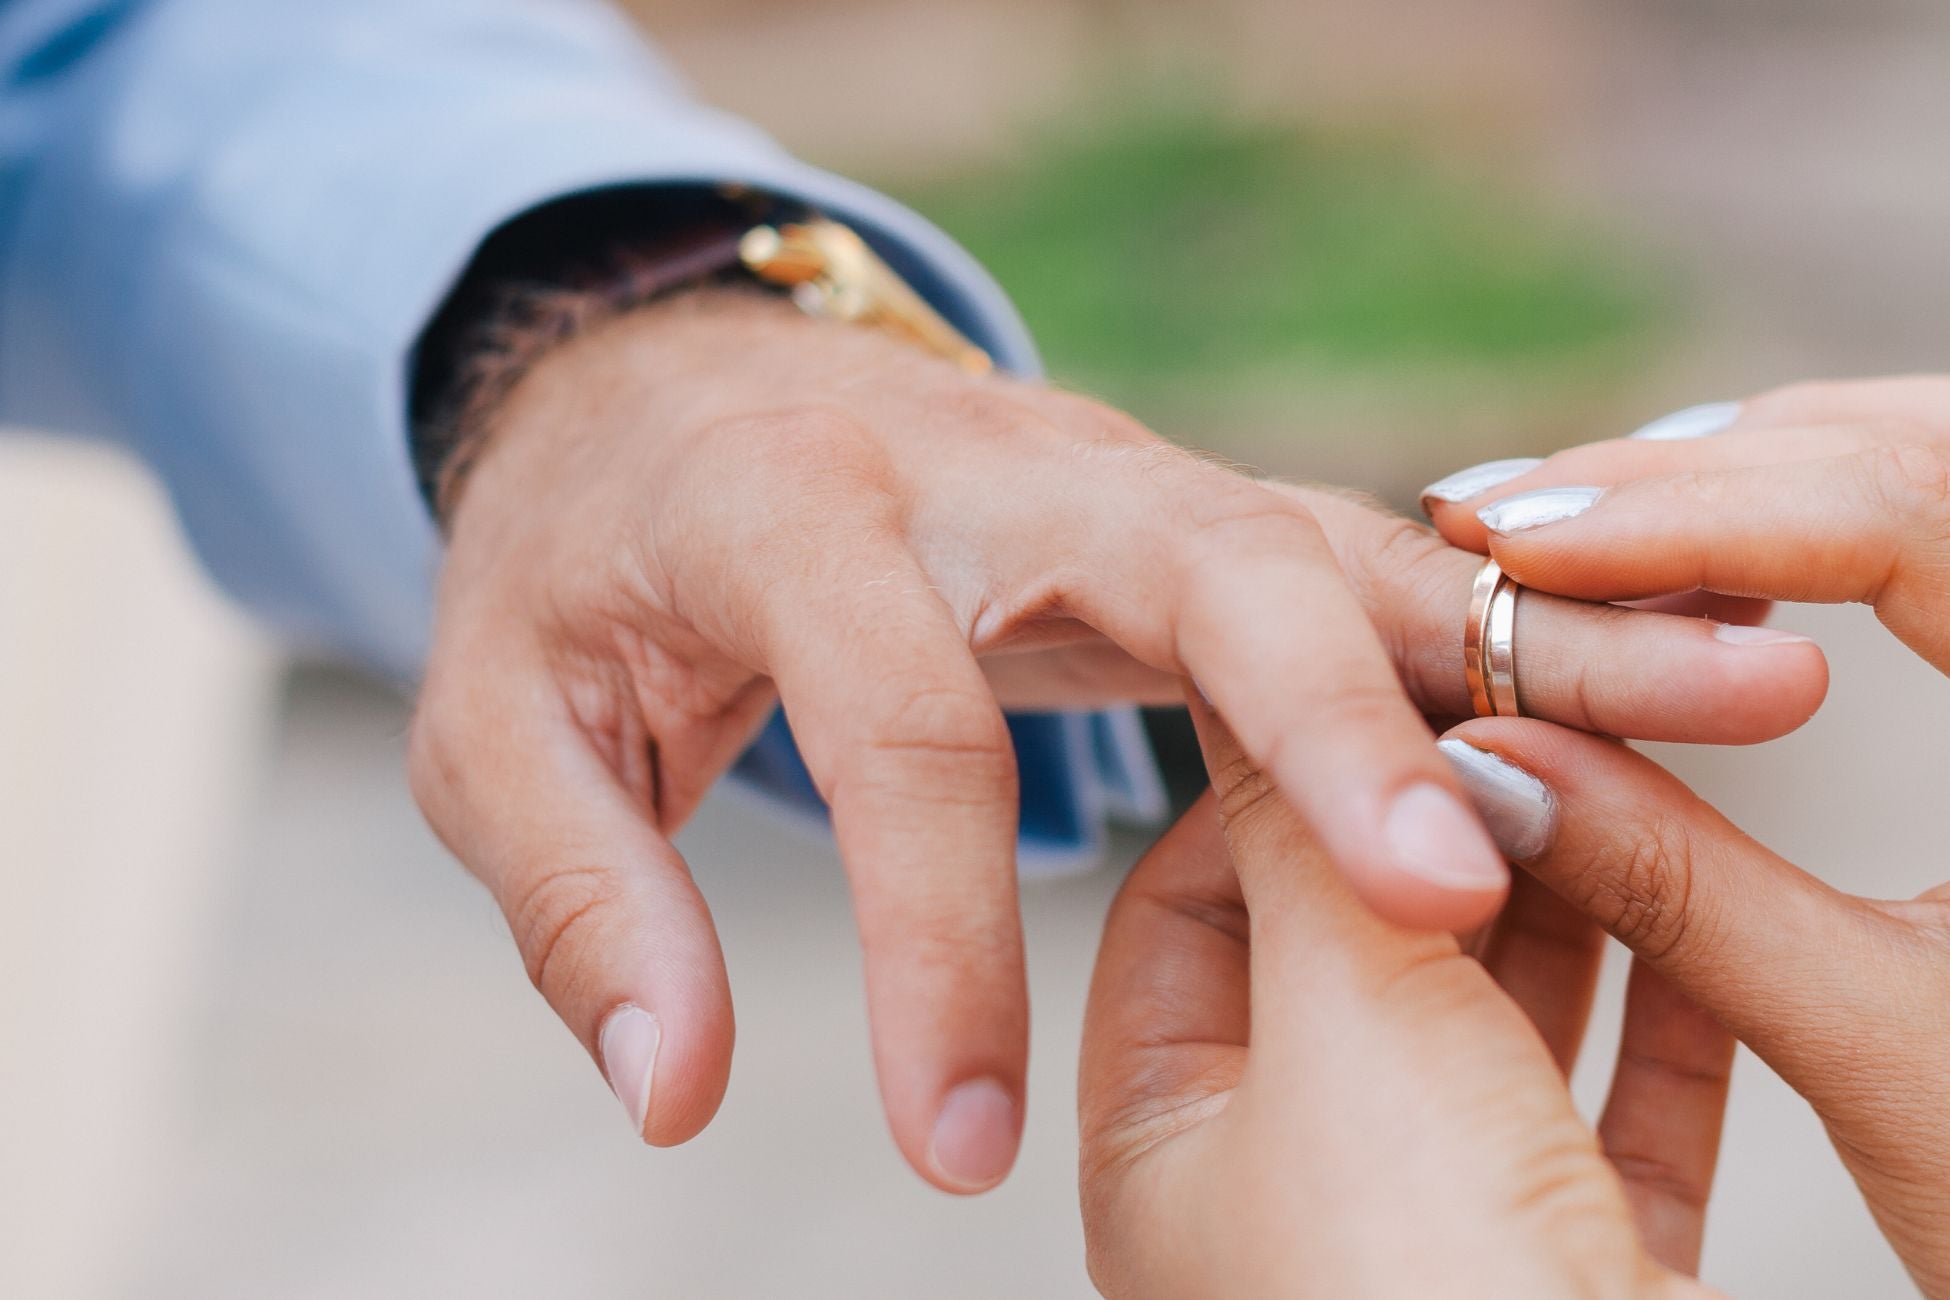 A girl giving her boyfriend an engagement ring